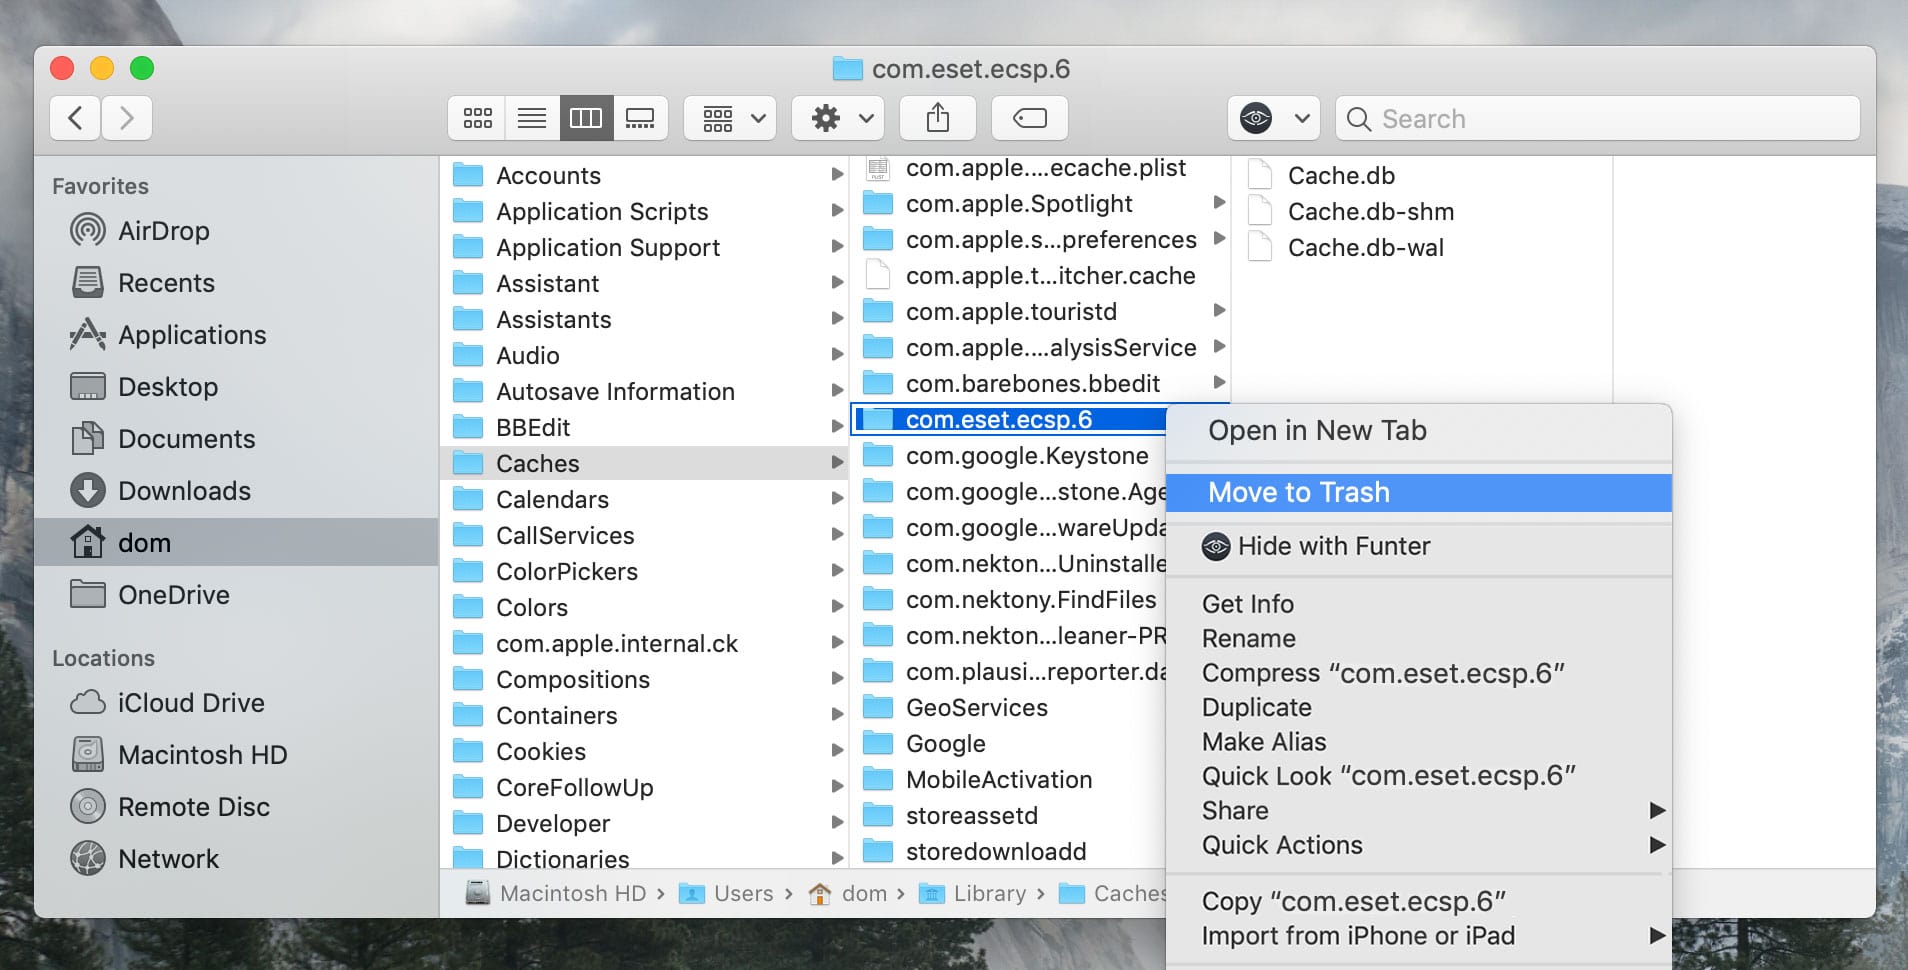 ESET Uninstaller 10.39.2.0 download the new version for apple